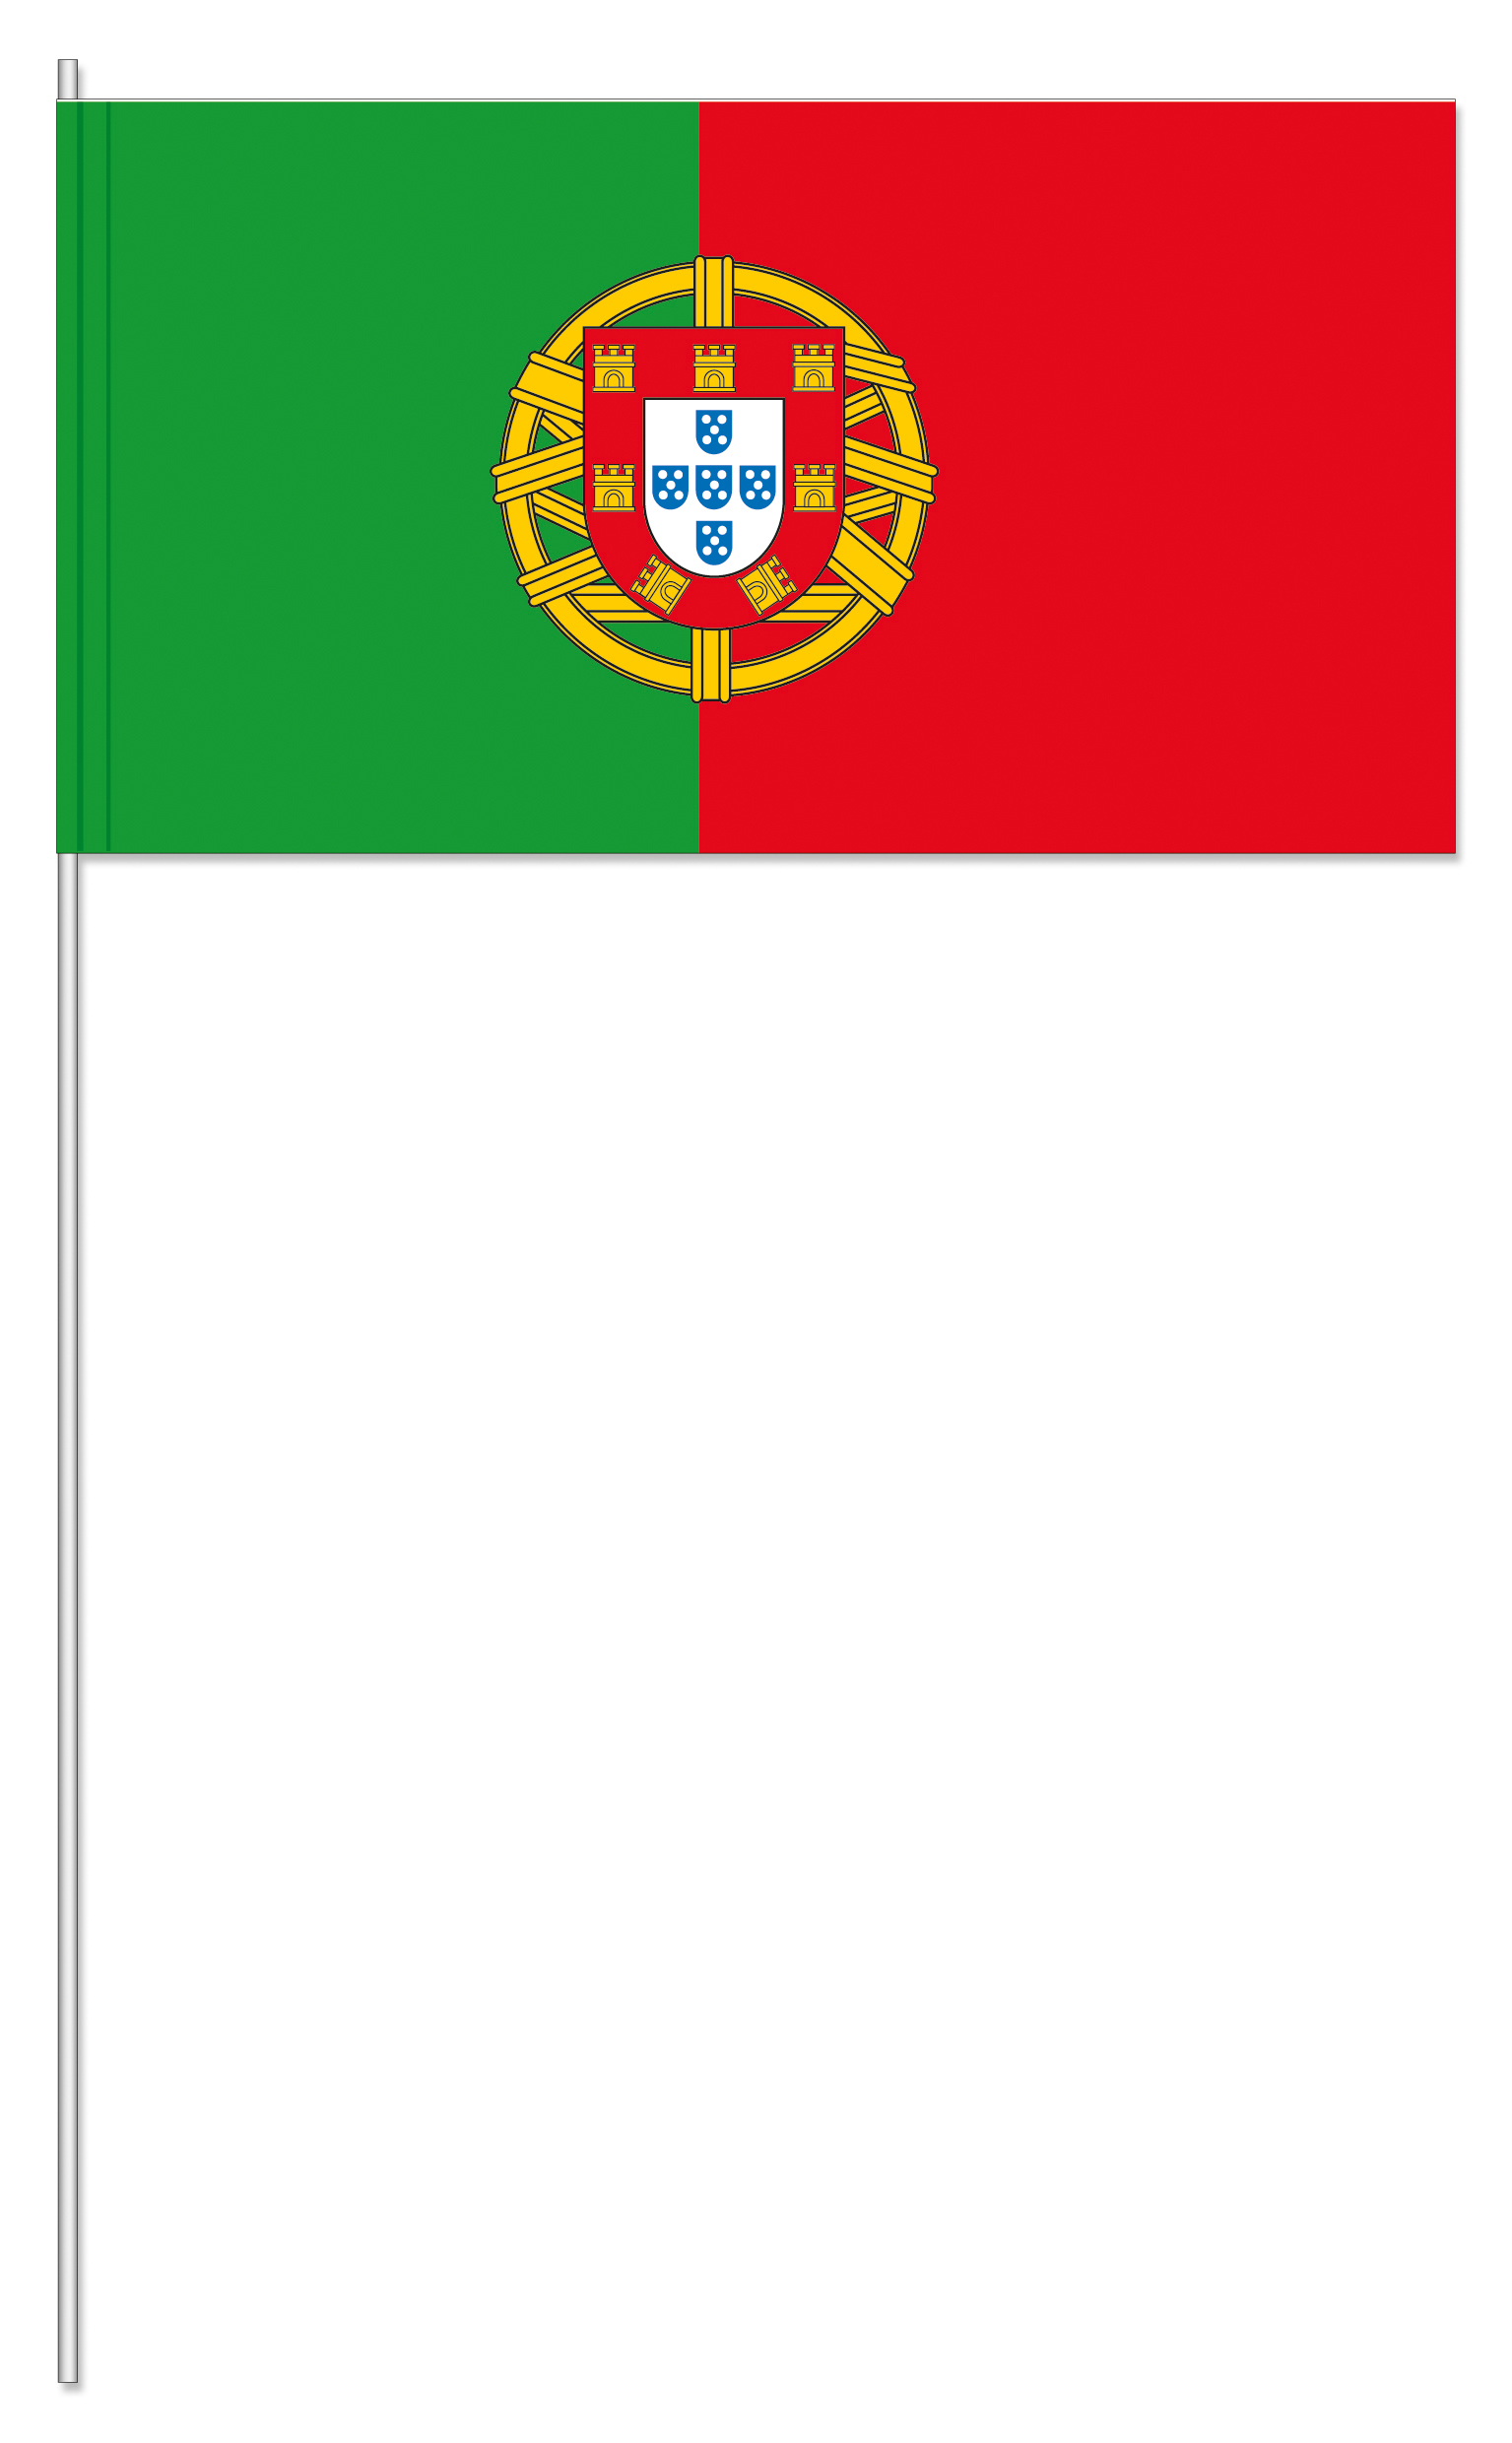 Werbeartikel: Papierfahnen,=Portugal Papier-fahnen,